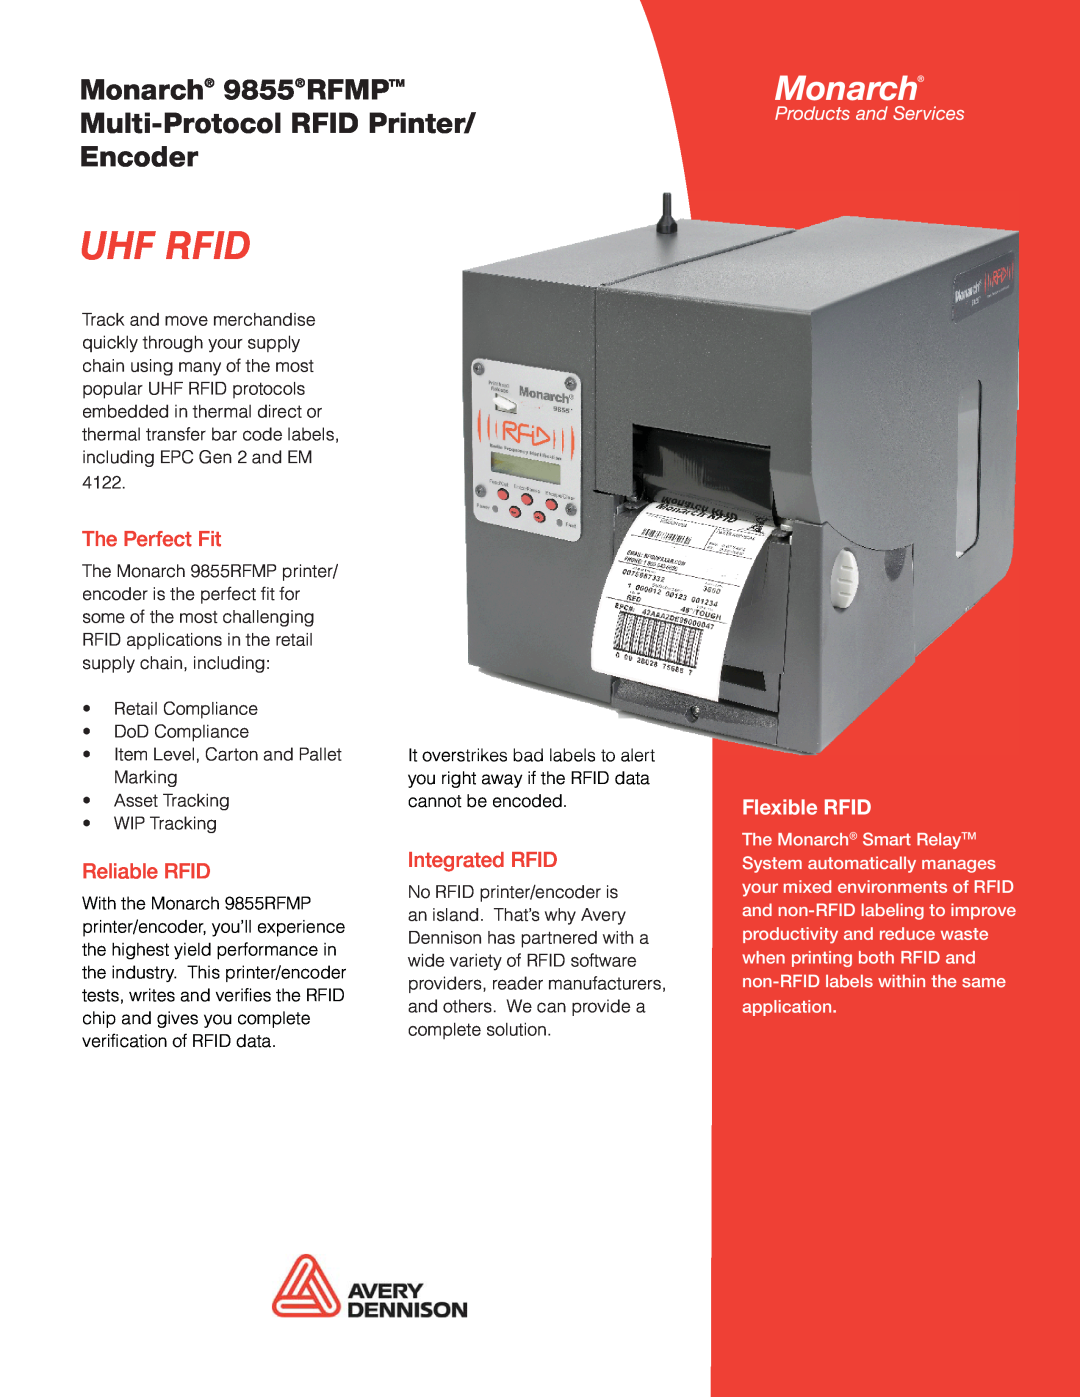 Monarch 9855 RFMP manual Monarch 9855RFMPTM Multi-Protocol RFID Printer Encoder, The Perfect Fit, Reliable RFID, Uhf Rfid 